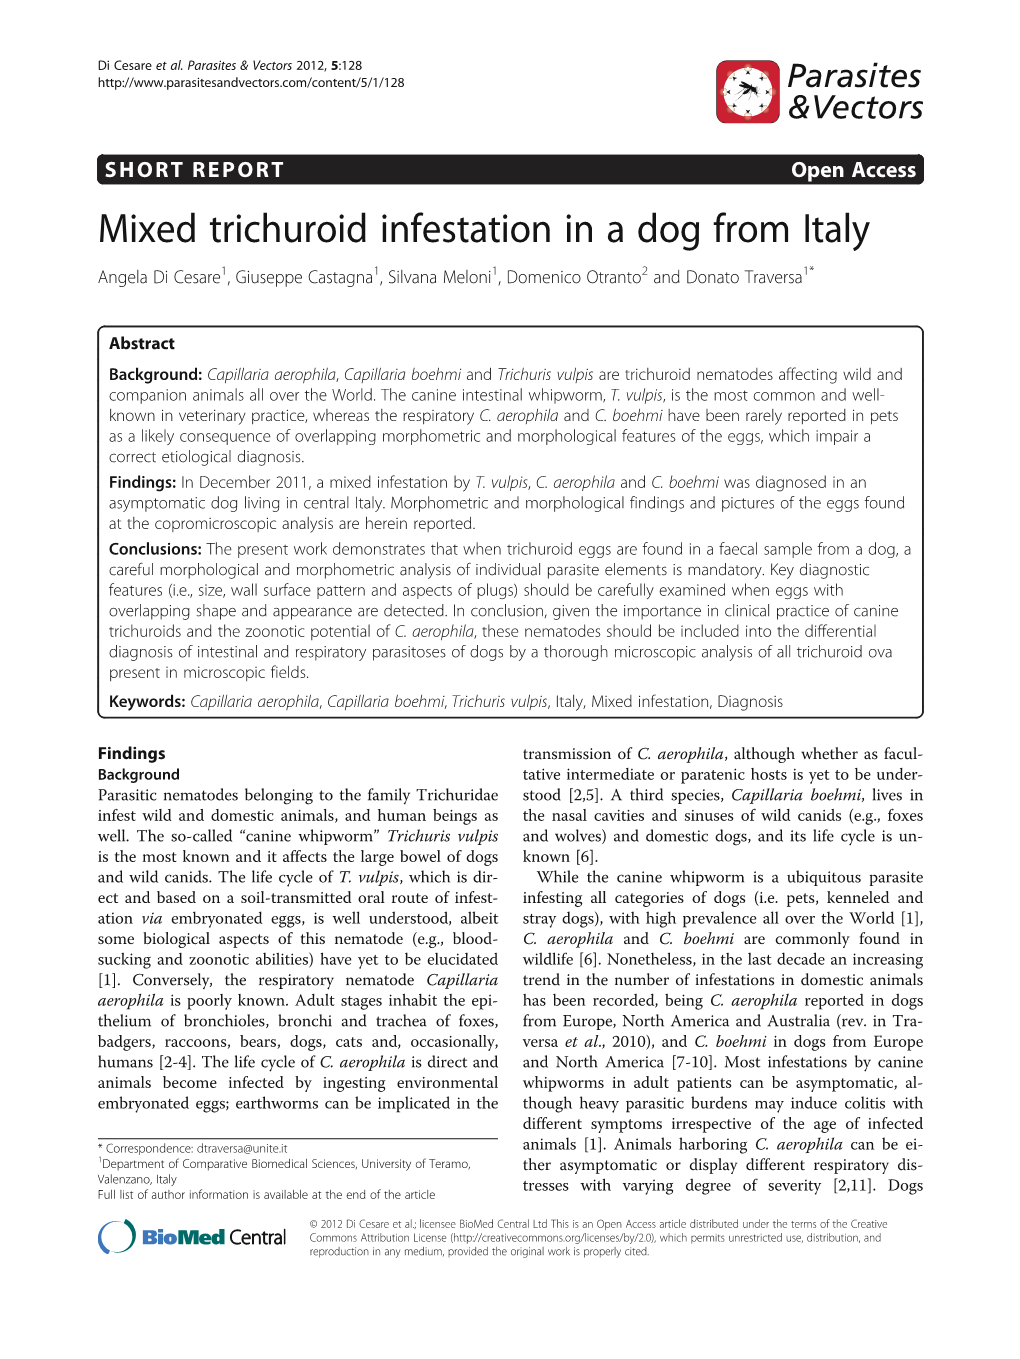 Mixed Trichuroid Infestation in a Dog from Italy Angela Di Cesare1, Giuseppe Castagna1, Silvana Meloni1, Domenico Otranto2 and Donato Traversa1*